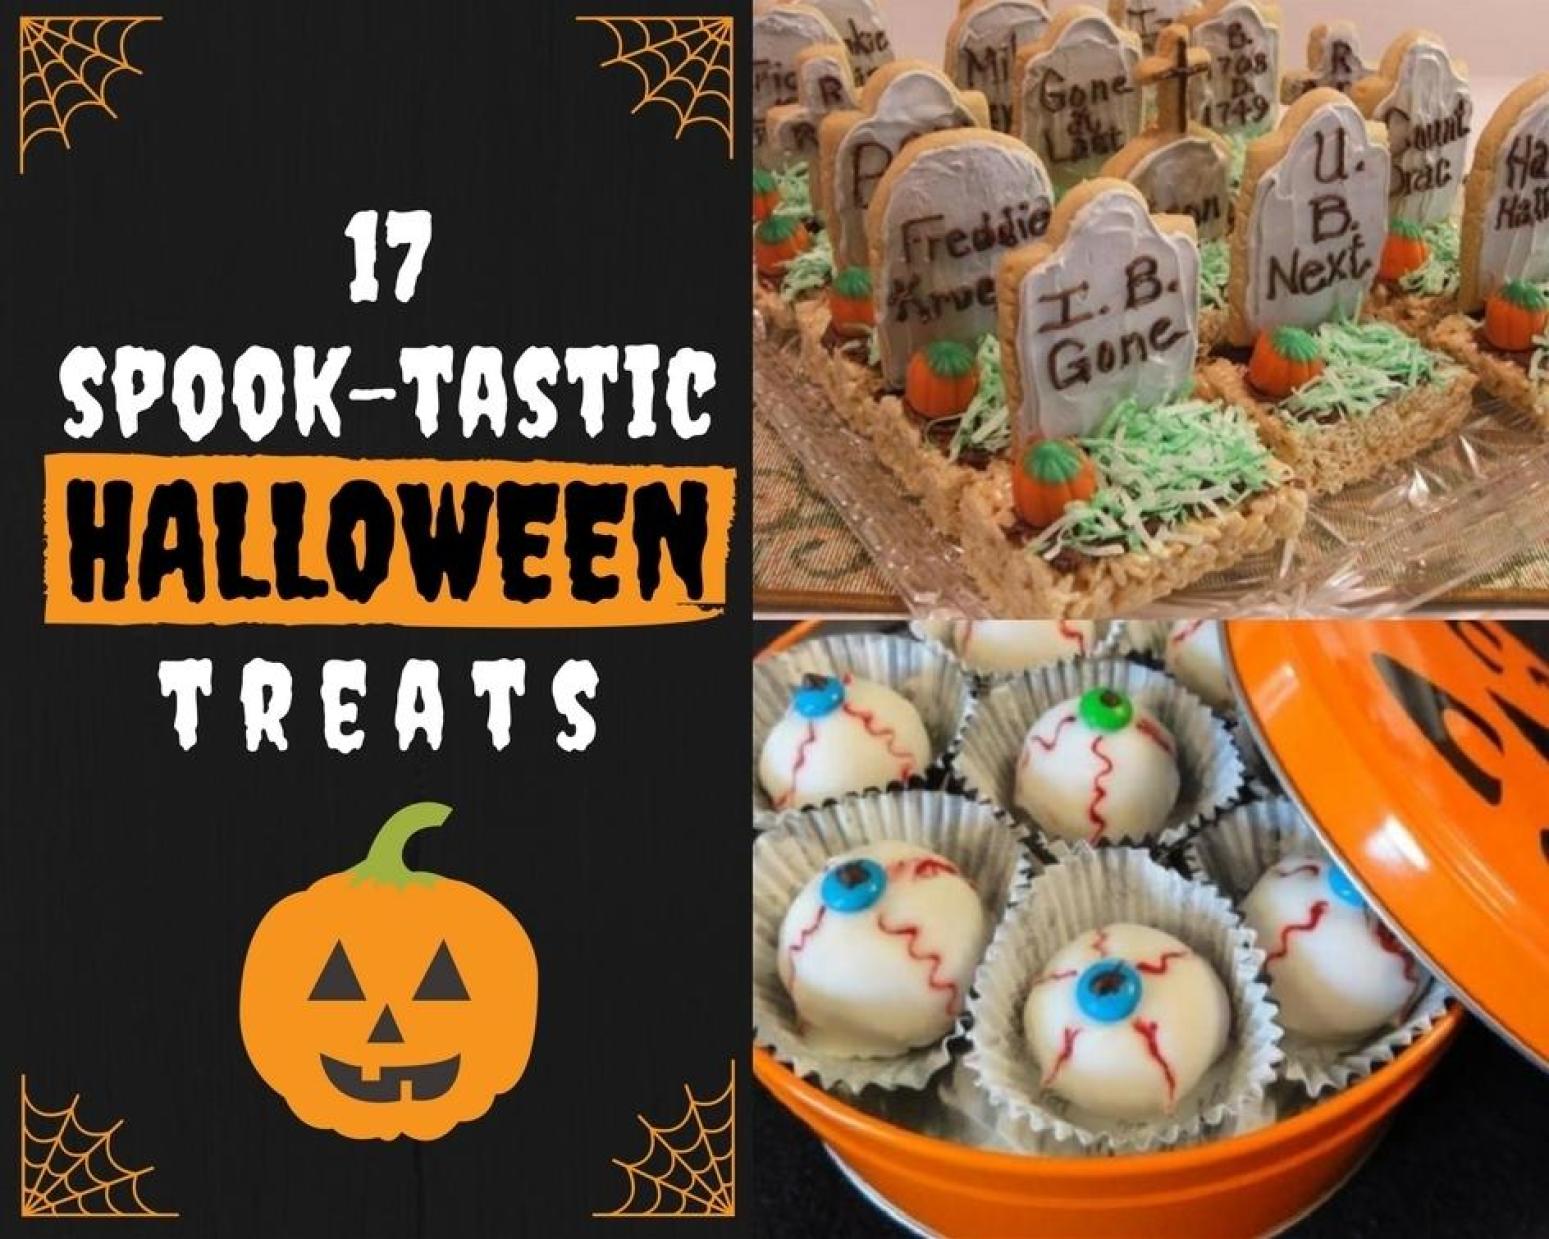 17 Halloween treats